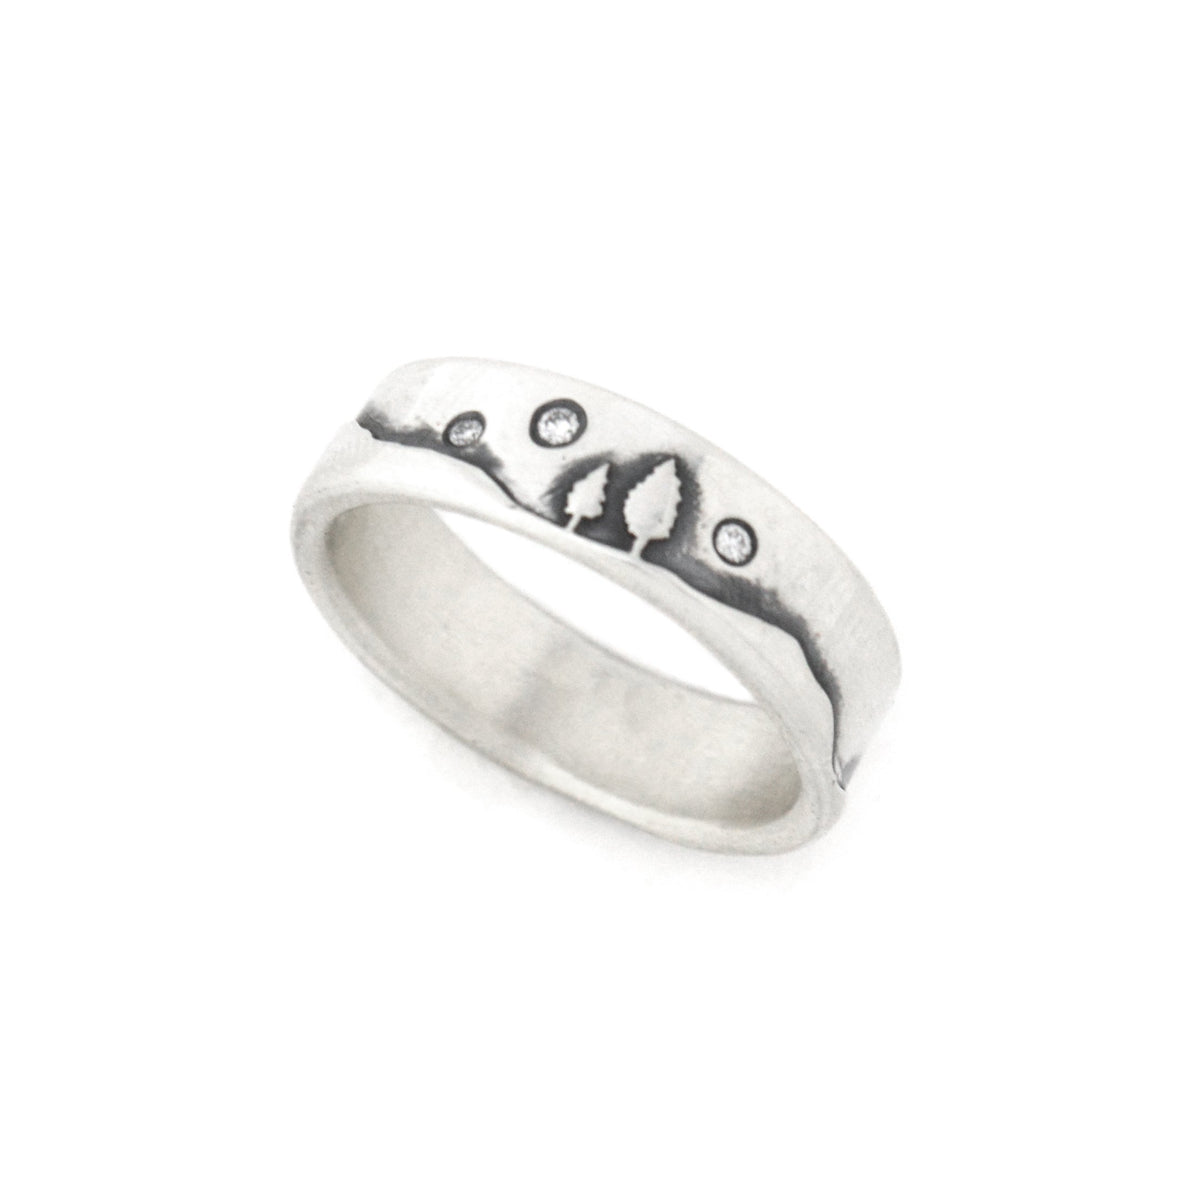 Silver Starry Diamond Sky Ring - Wedding Ring 6mm / 4 6mm / 4.25 2214 - handmade by Beth Millner Jewelry